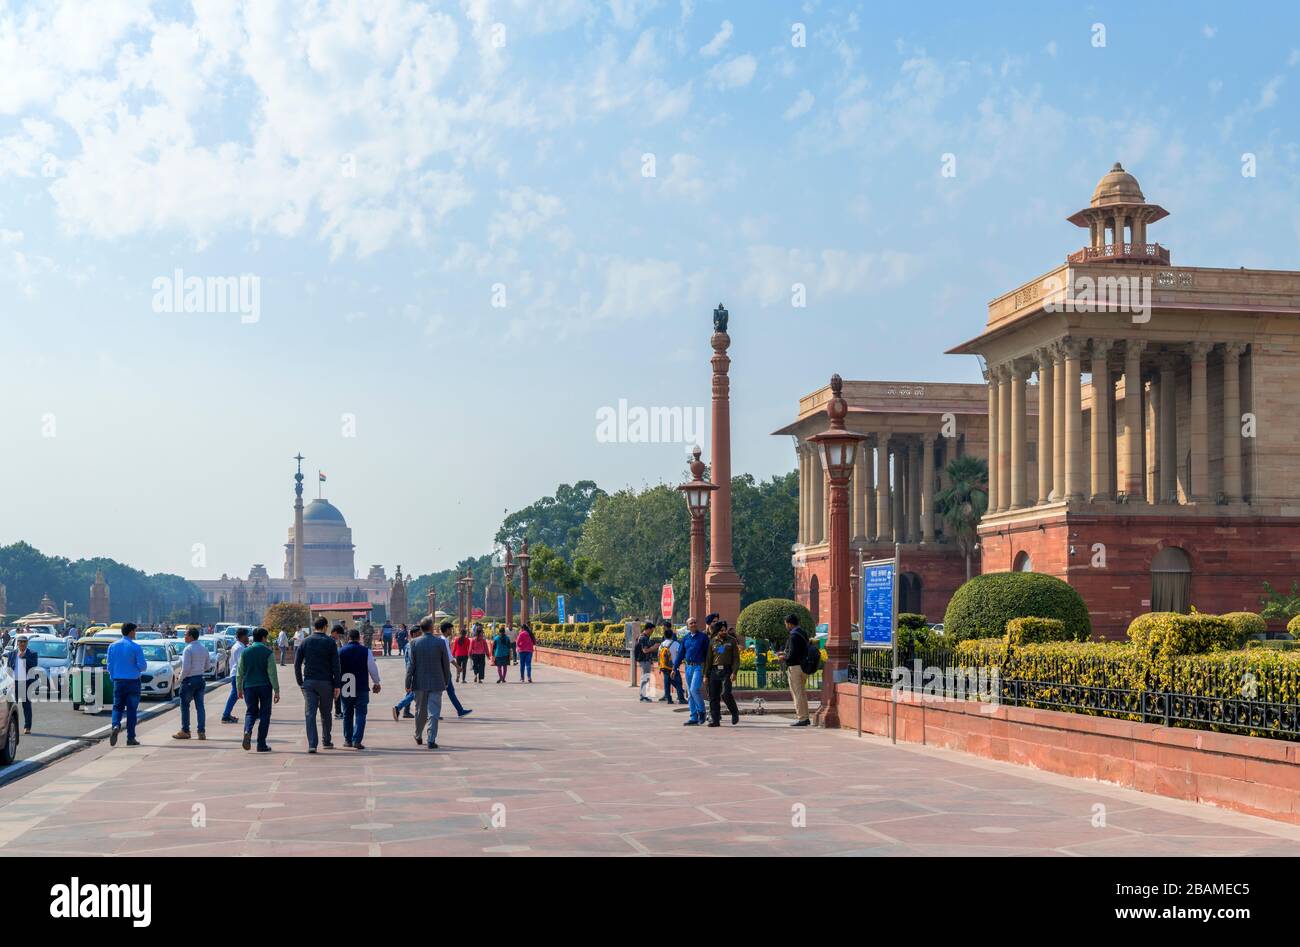 Government buildings on Rajpath looking towards Rashtrapati Bhavan (the presidential palace), New Delhi, Delhi, India Stock Photo